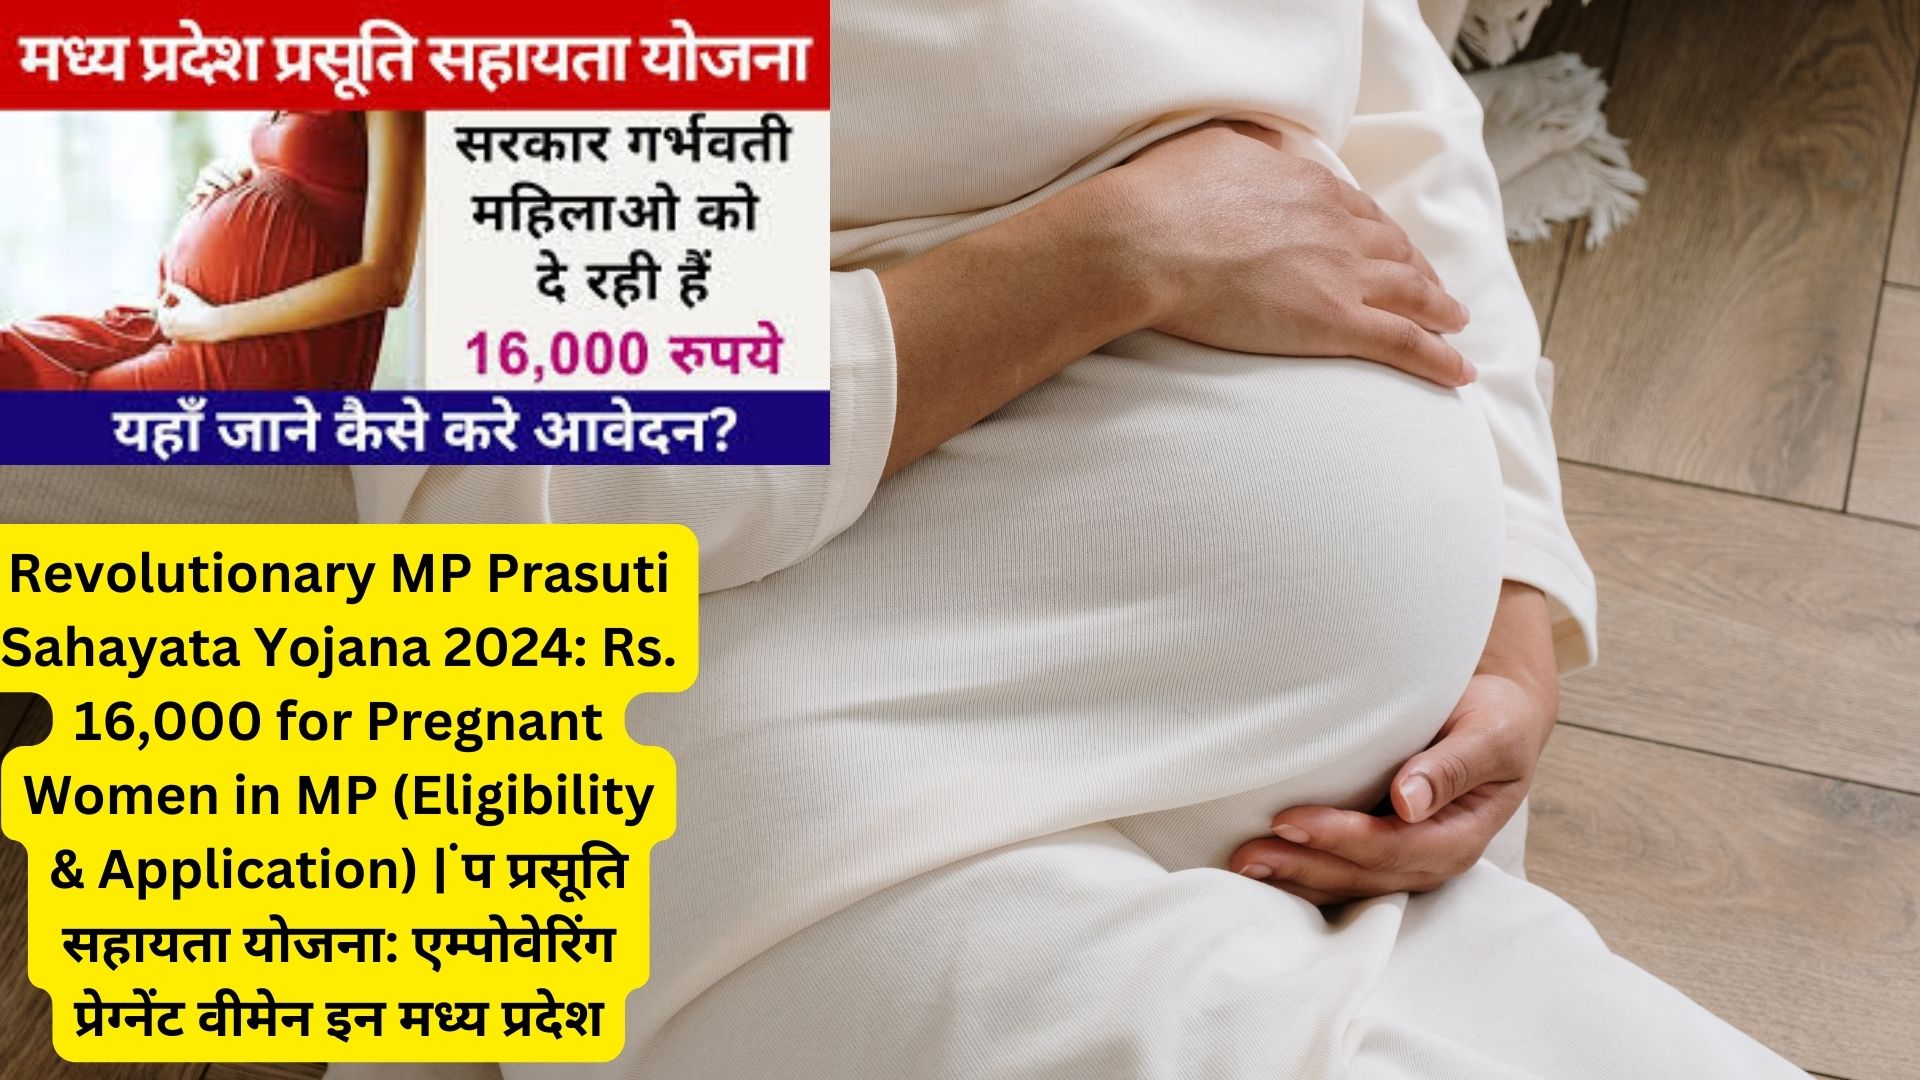 Revolutionary MP Prasuti Sahayata Yojana 2024: Rs. 16,000 for Pregnant Women in MP (Eligibility & Application) | ंप प्रसूति सहायता योजना: एम्पोवेरिंग प्रेग्नेंट वीमेन इन मध्य प्रदेश